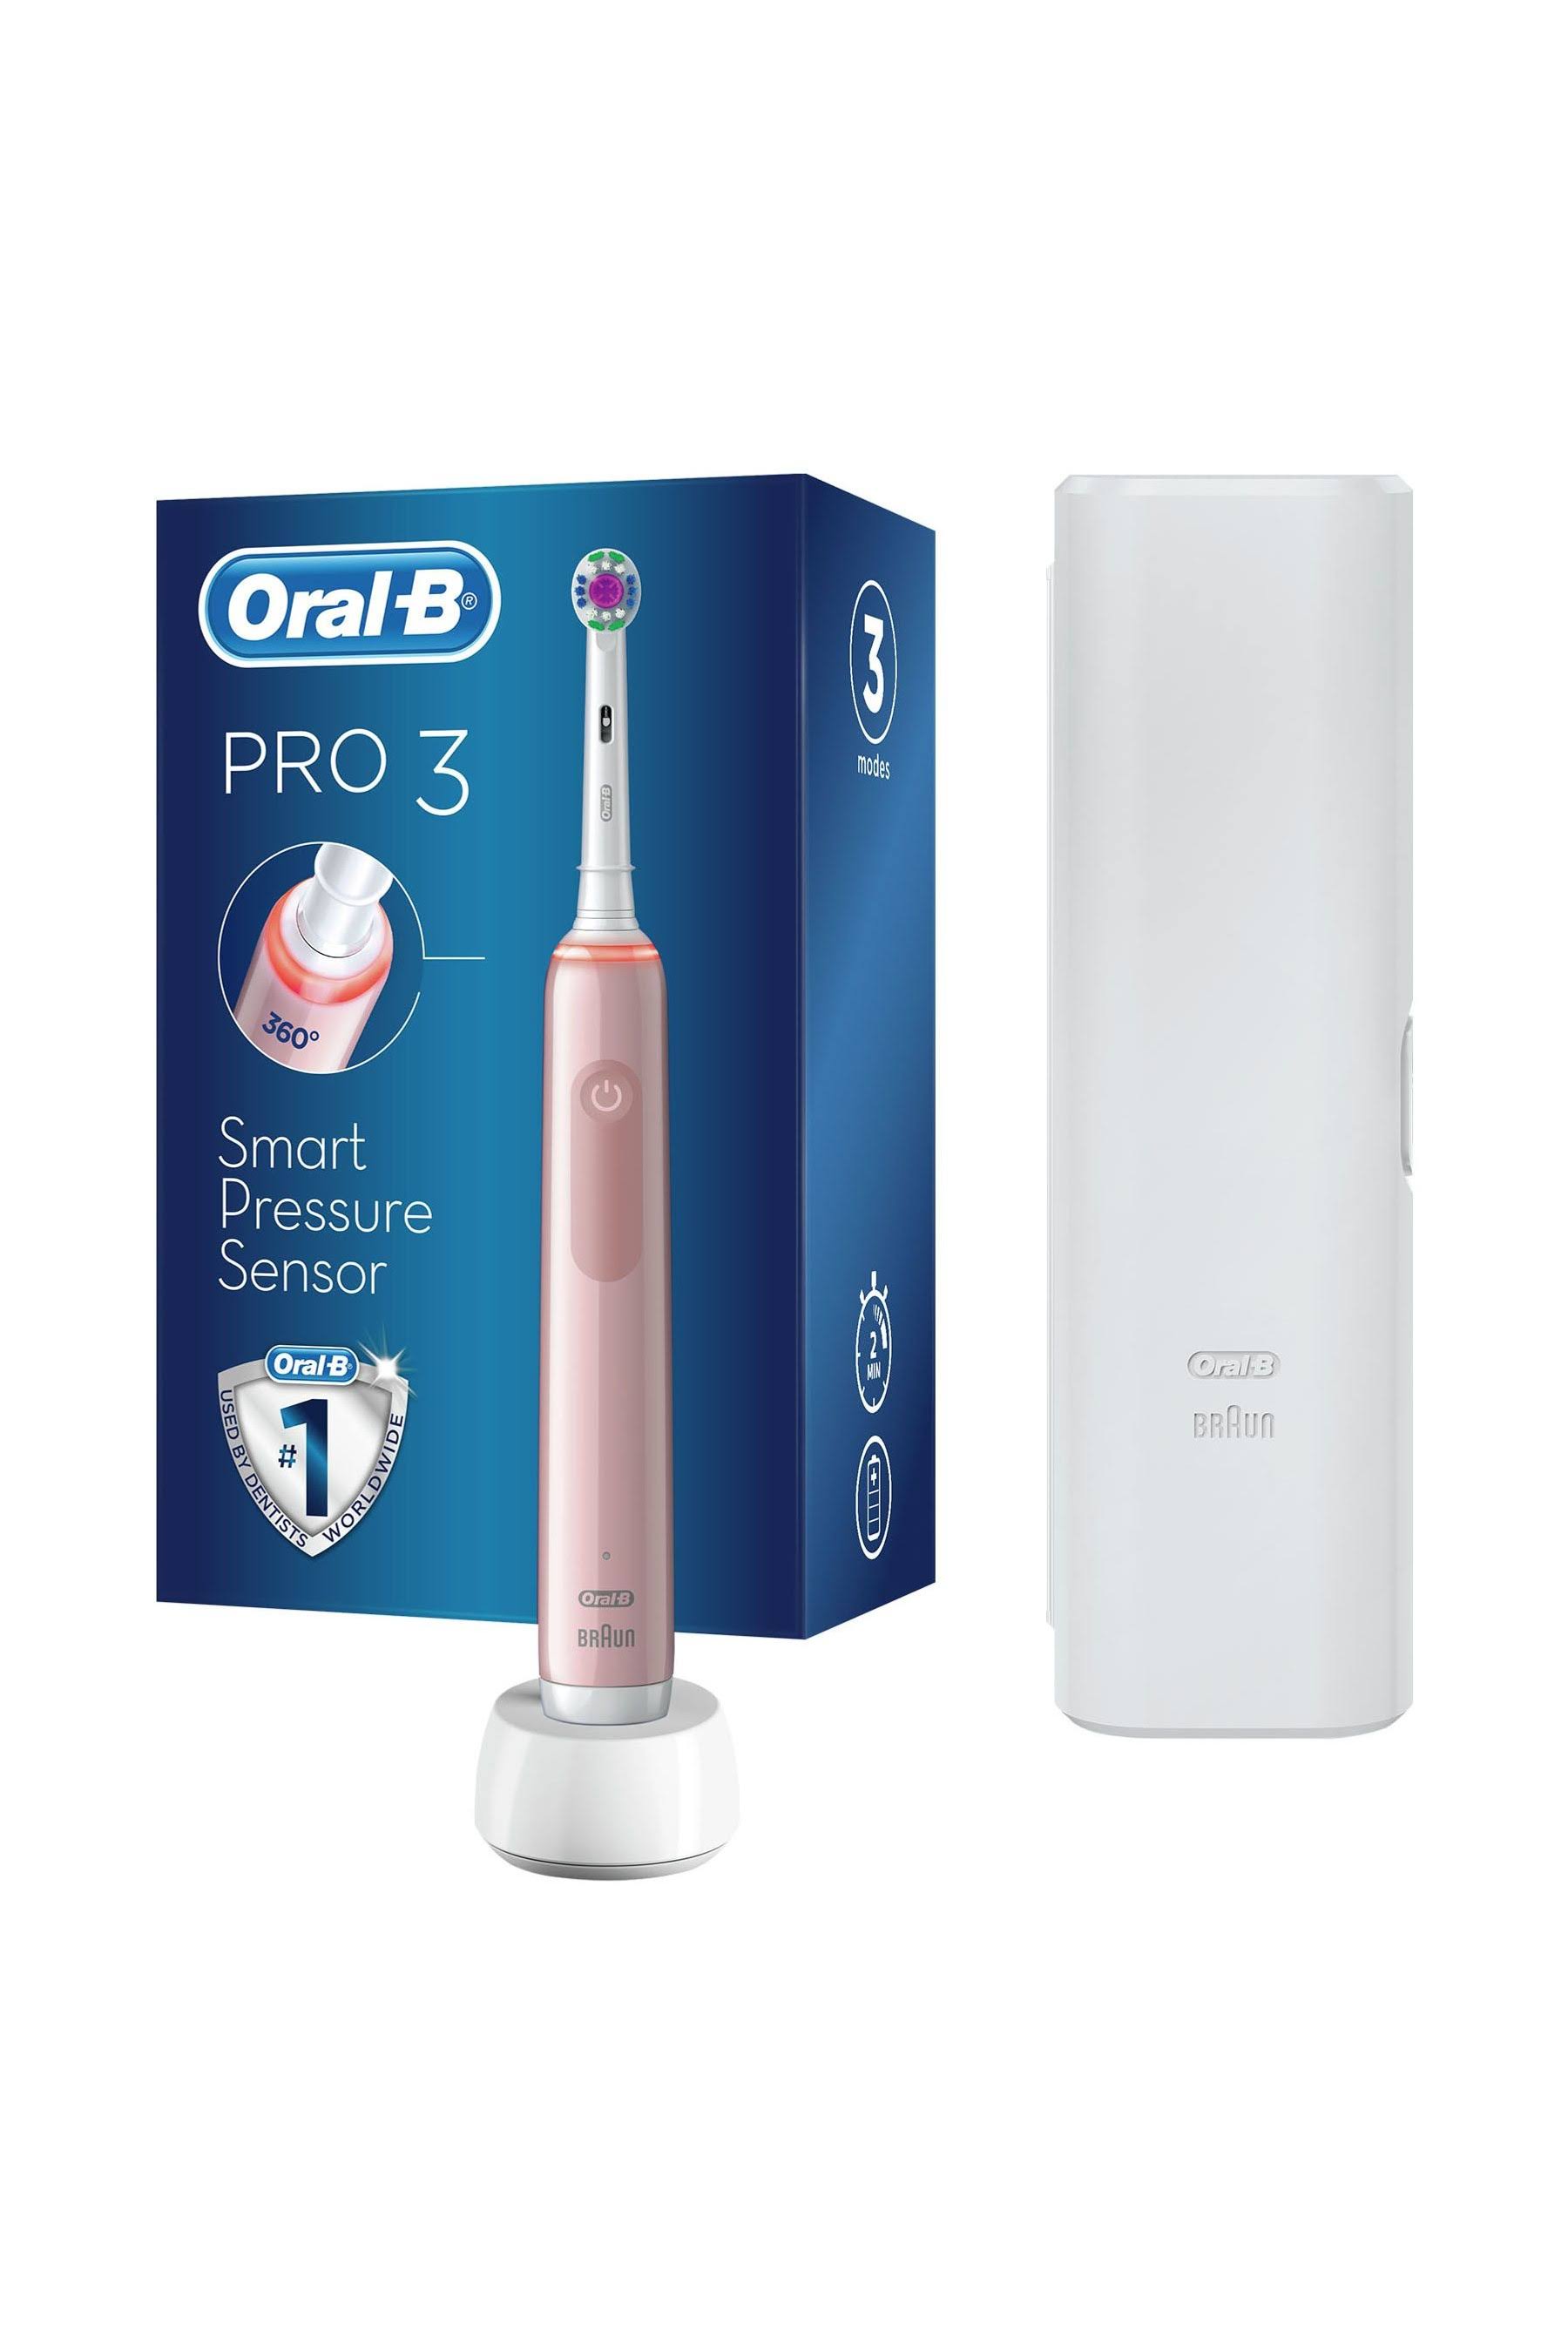 Oral B Pro 3 3500 Electric Toothbrush - Pink